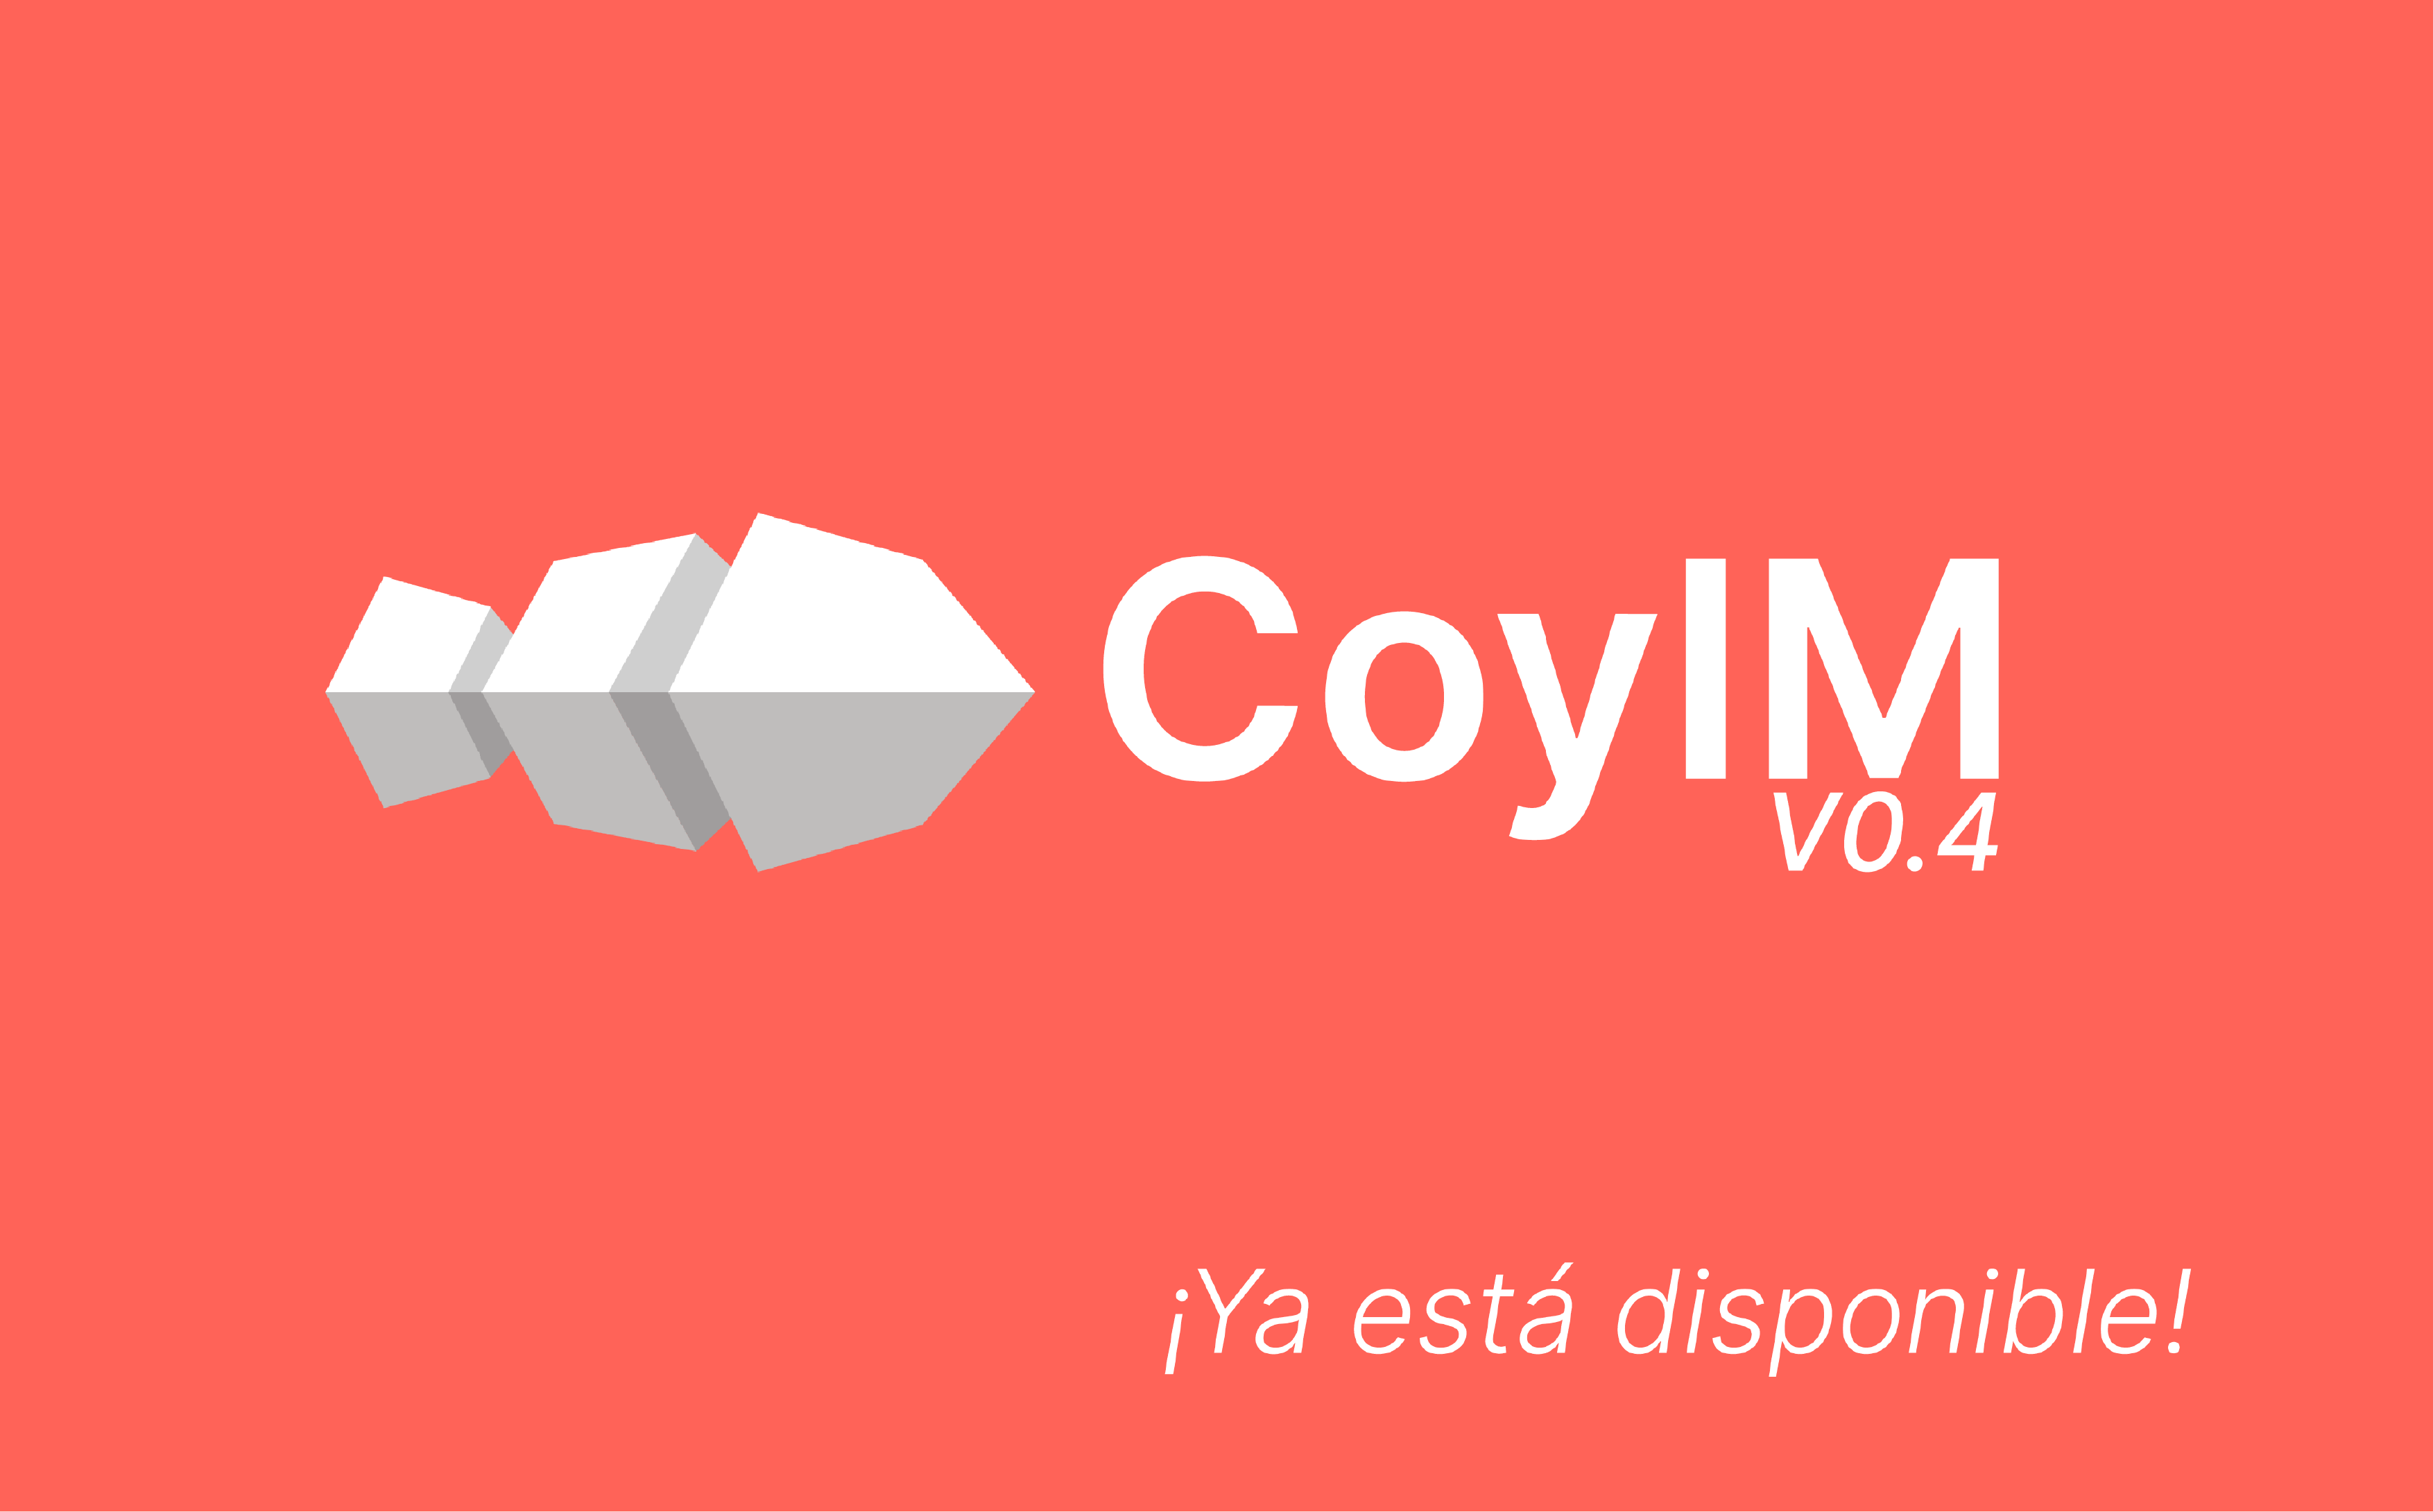 ¡CoyIM v0.4 ya está disponible!